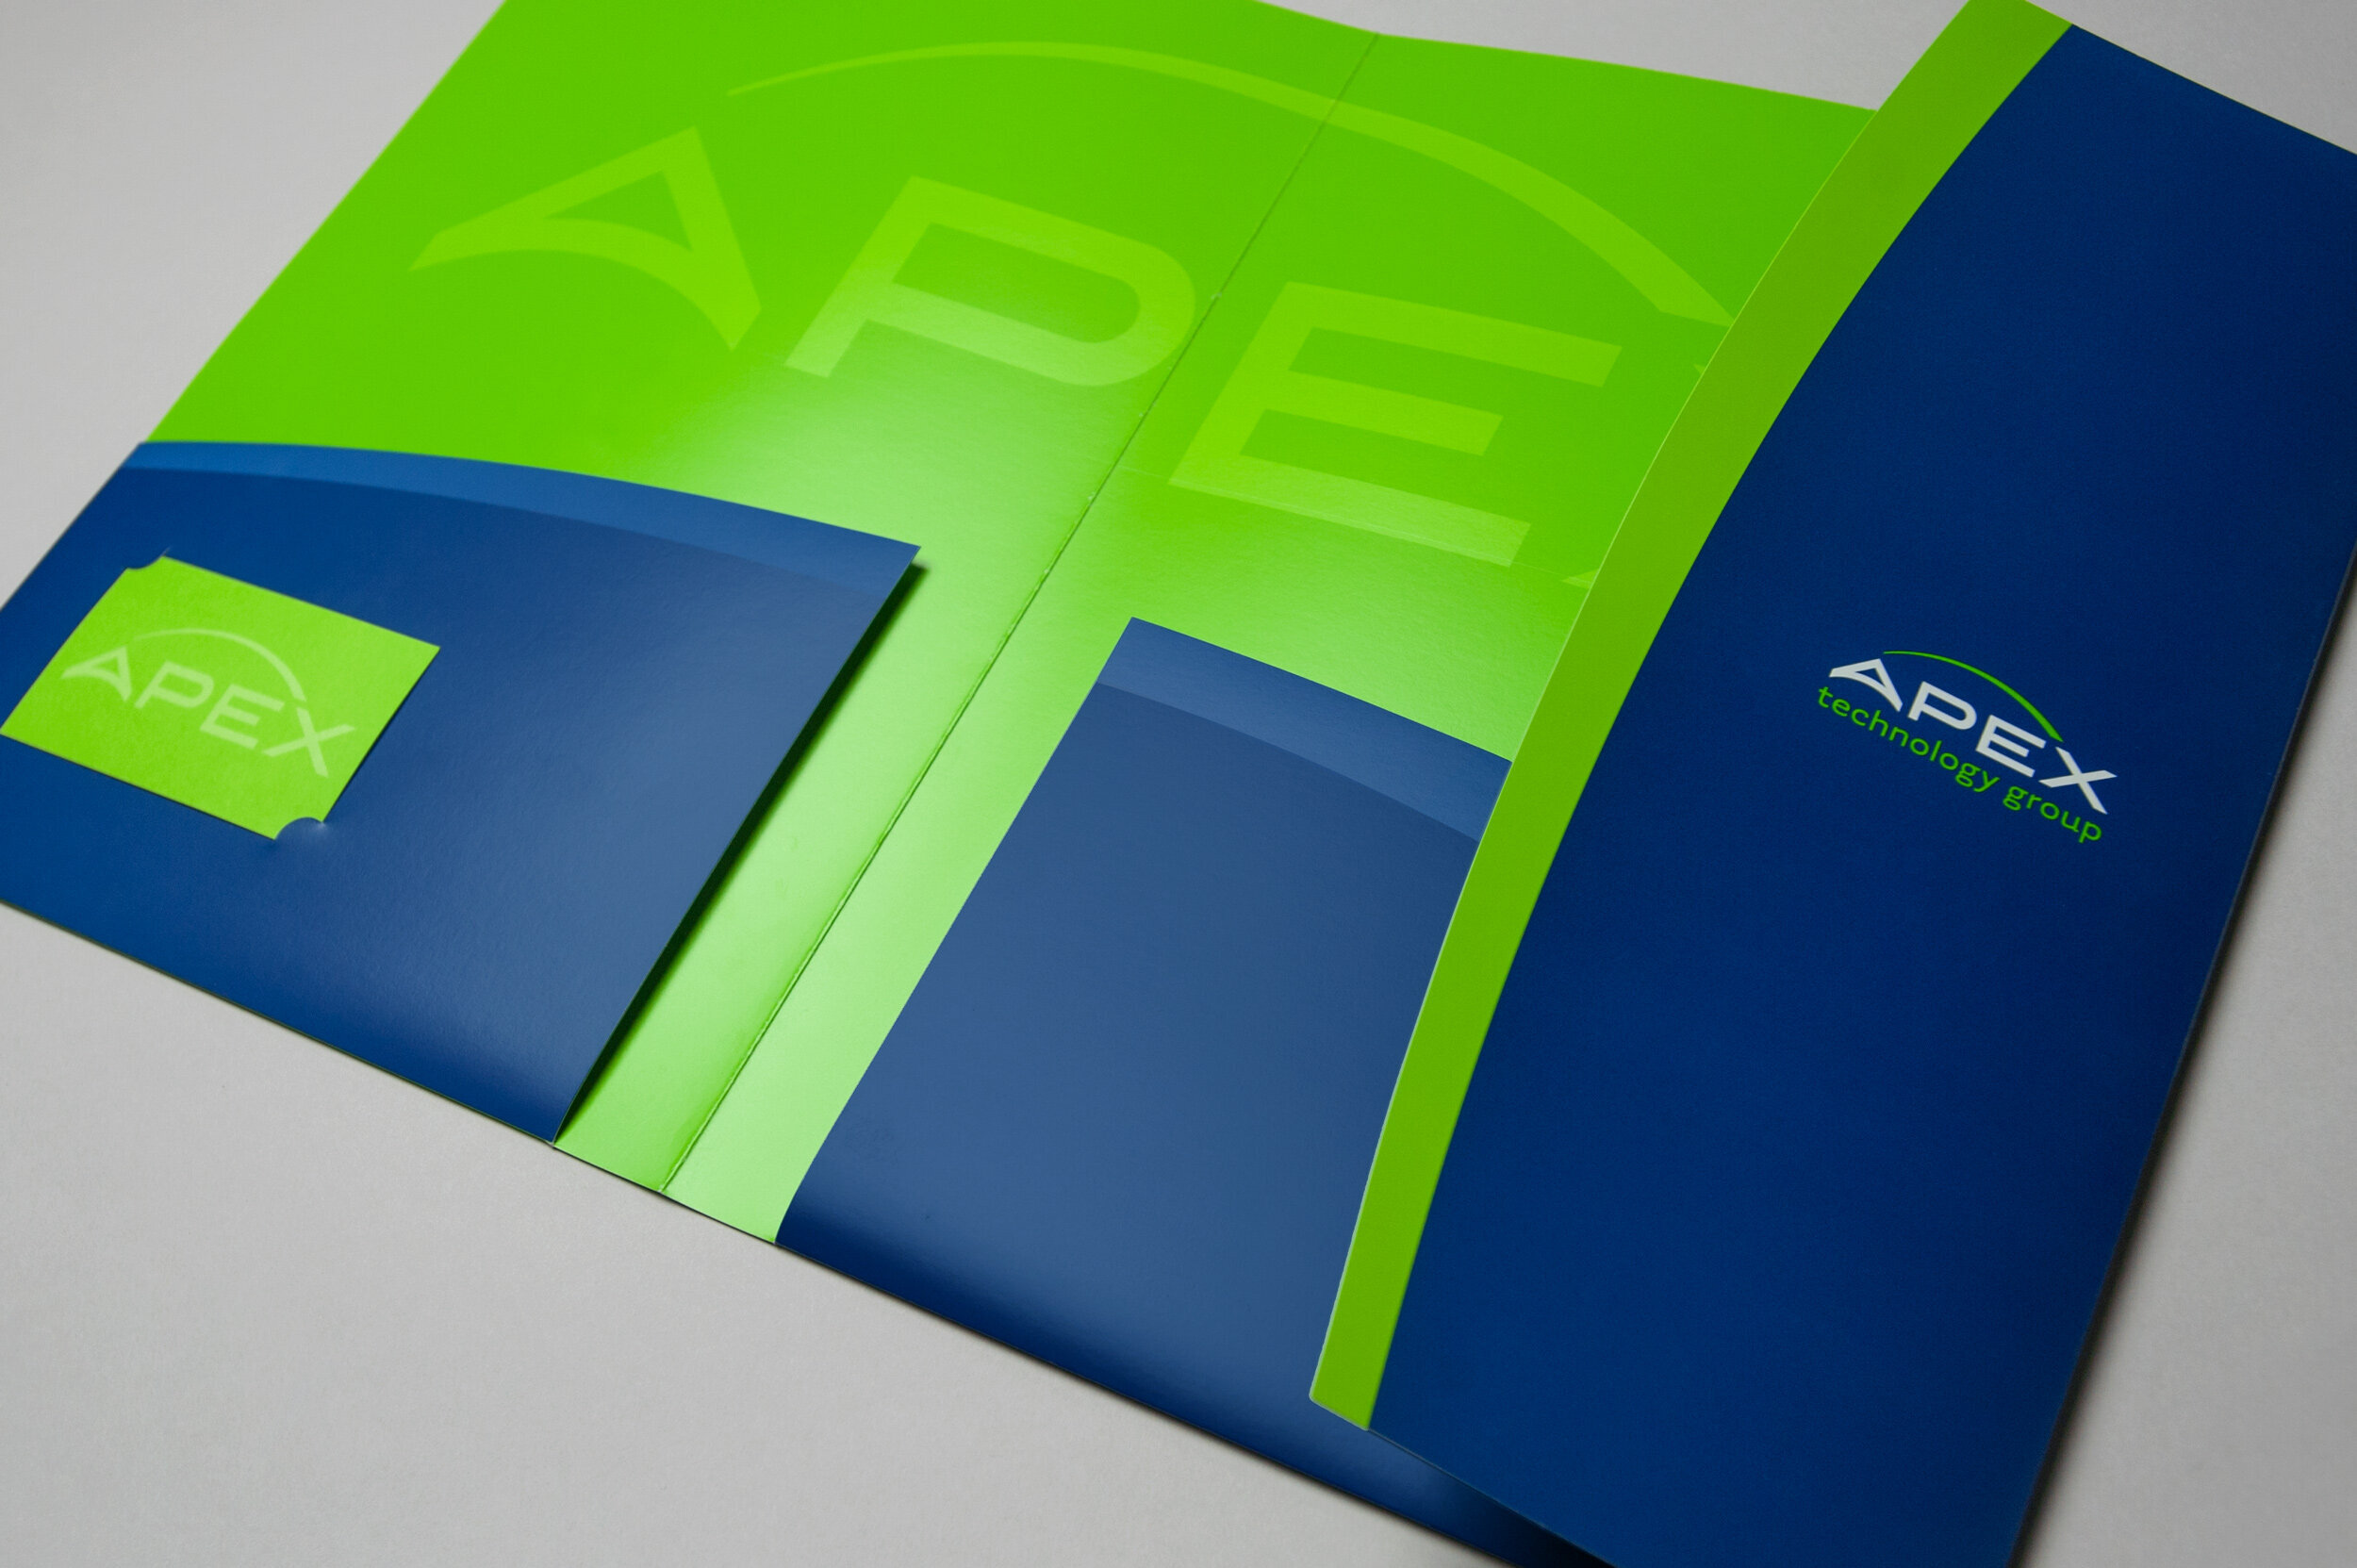   Apex Technology Group Marketing Folder  • interior view 